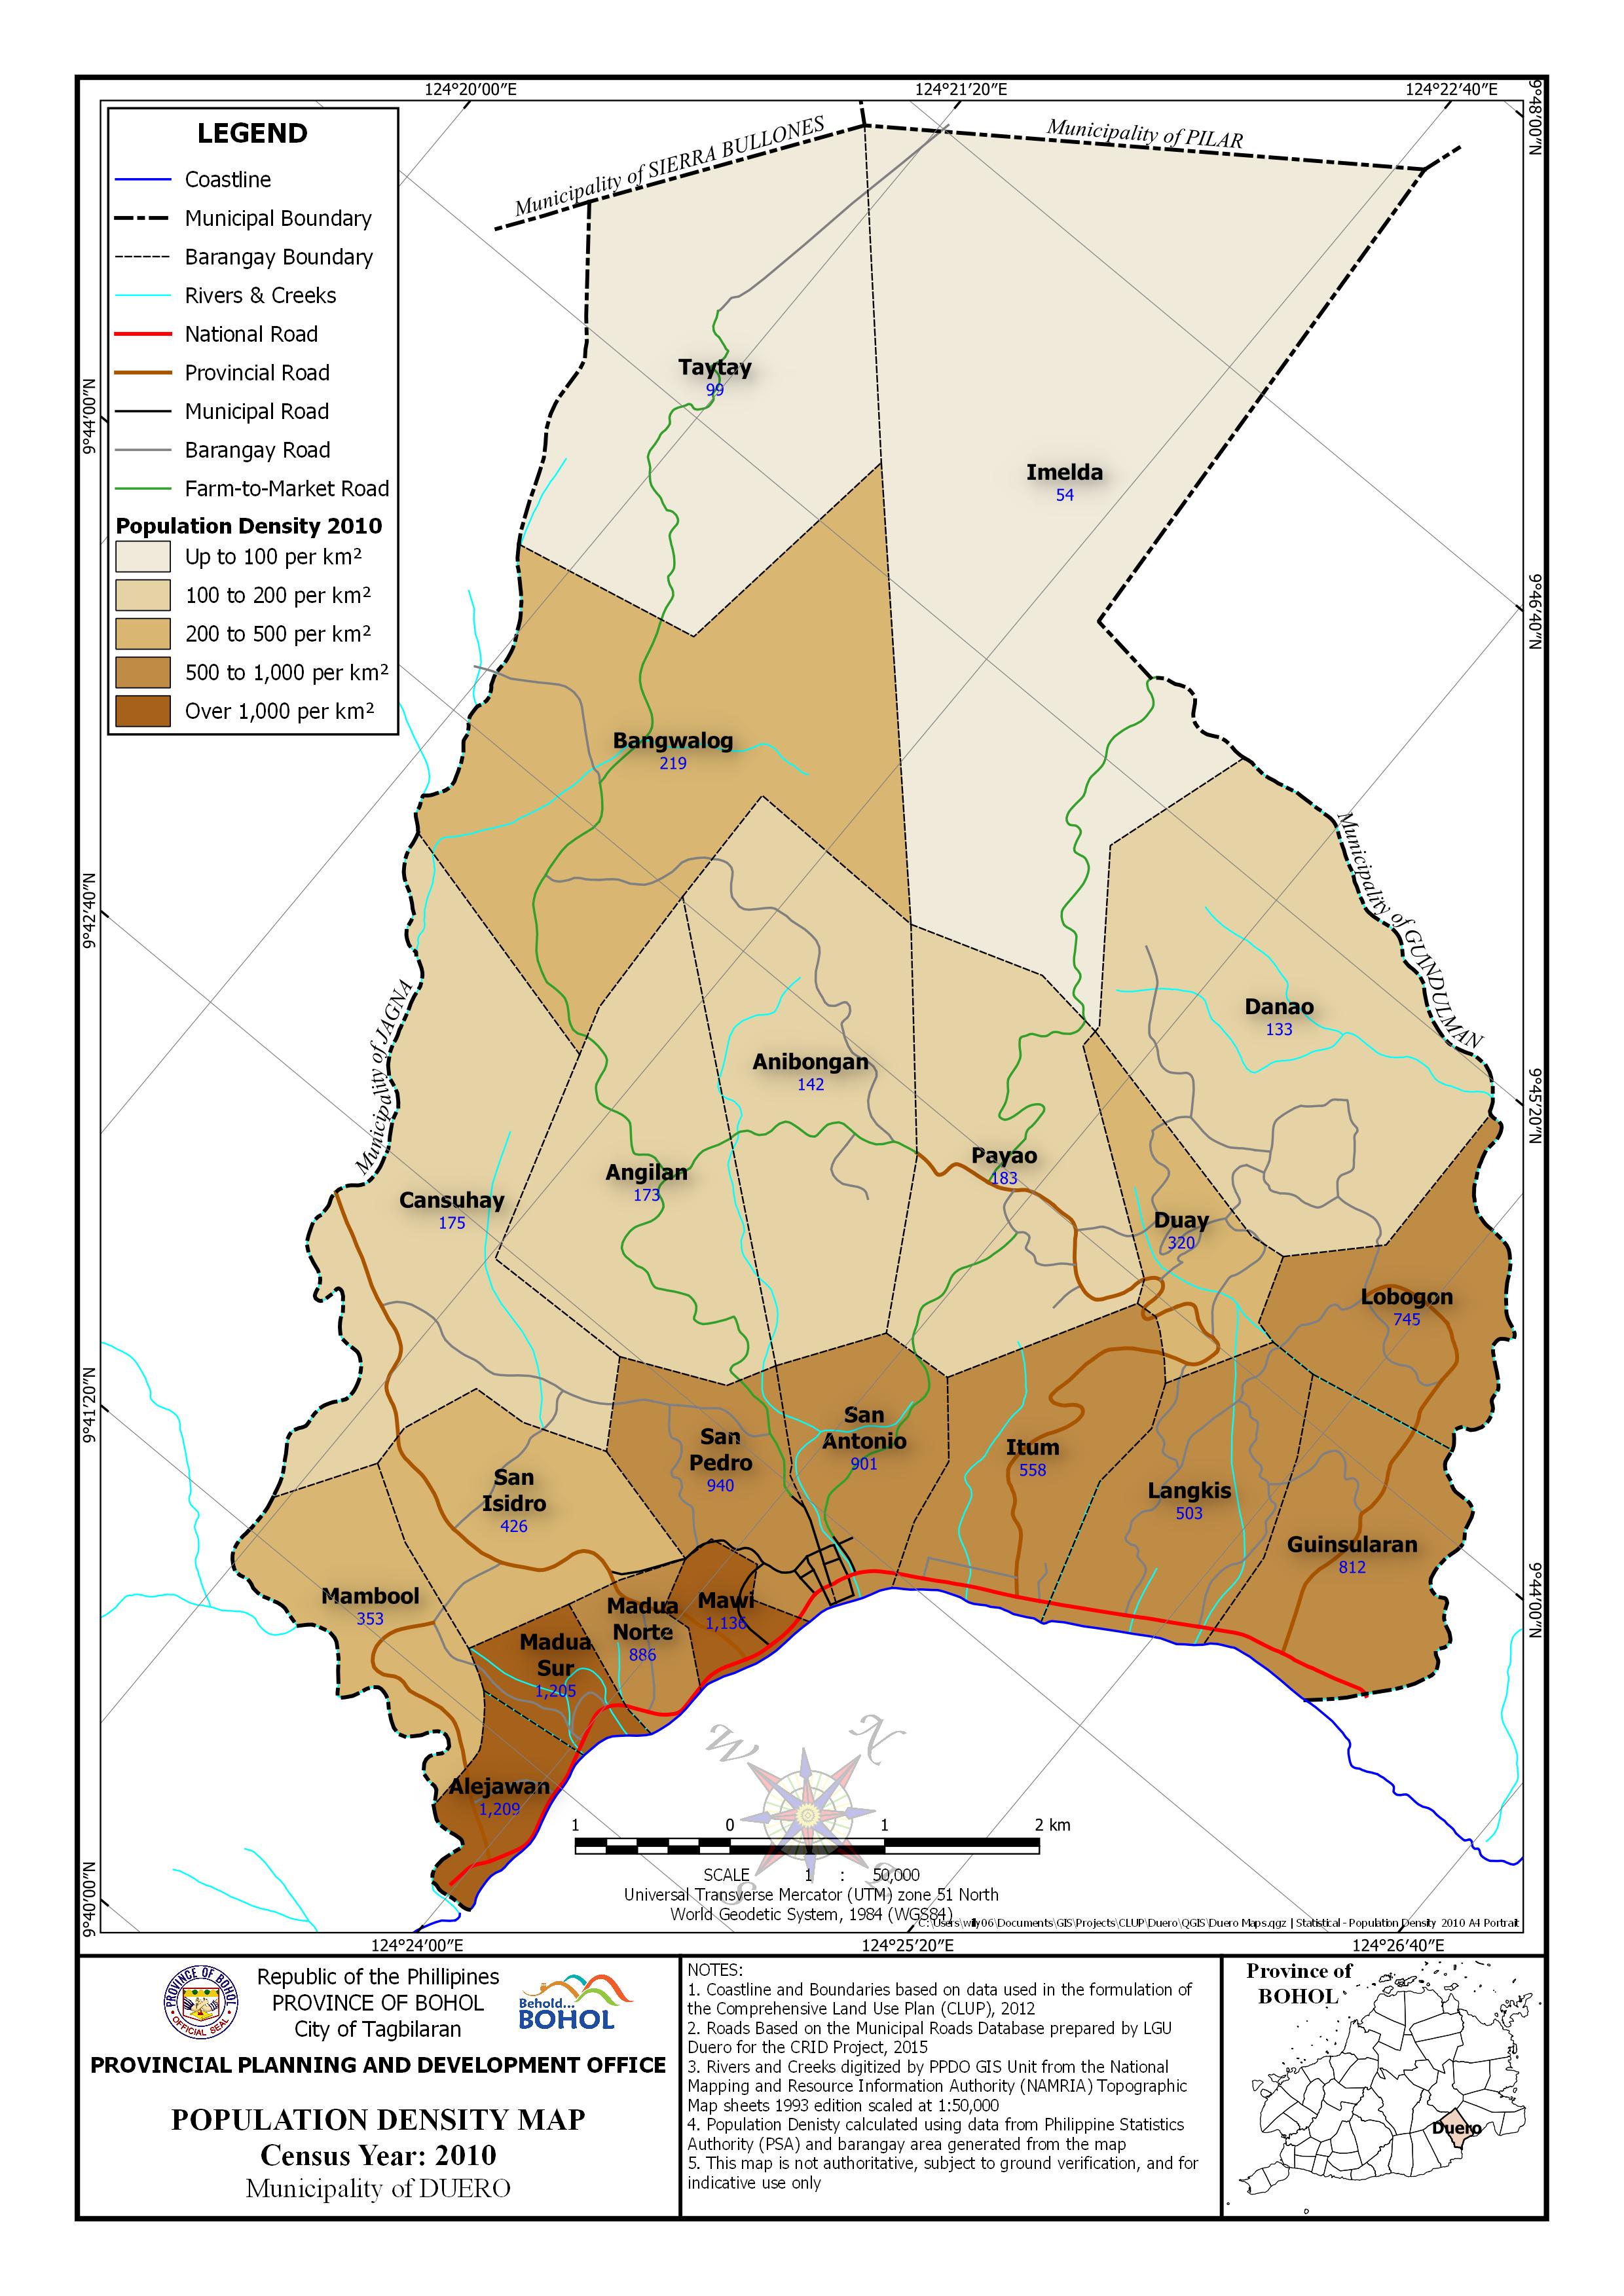 0Population Density Census Year: 2010